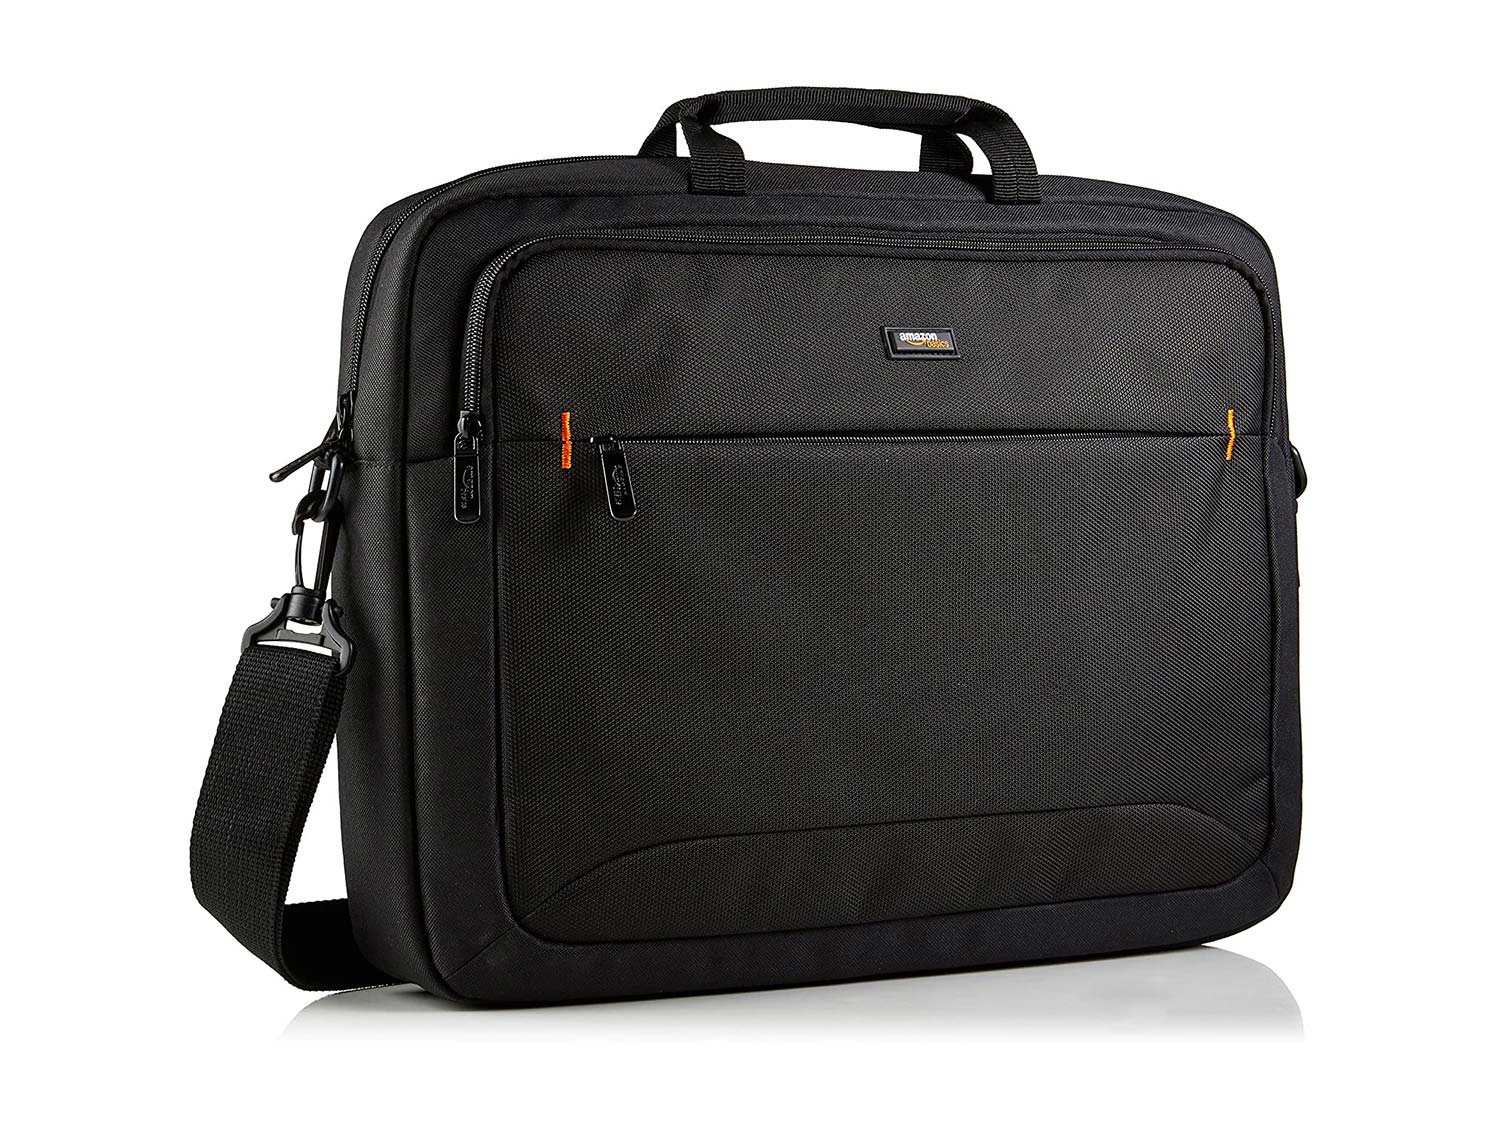 Amazon Basics 17.3 Inch Laptop Computer Bag